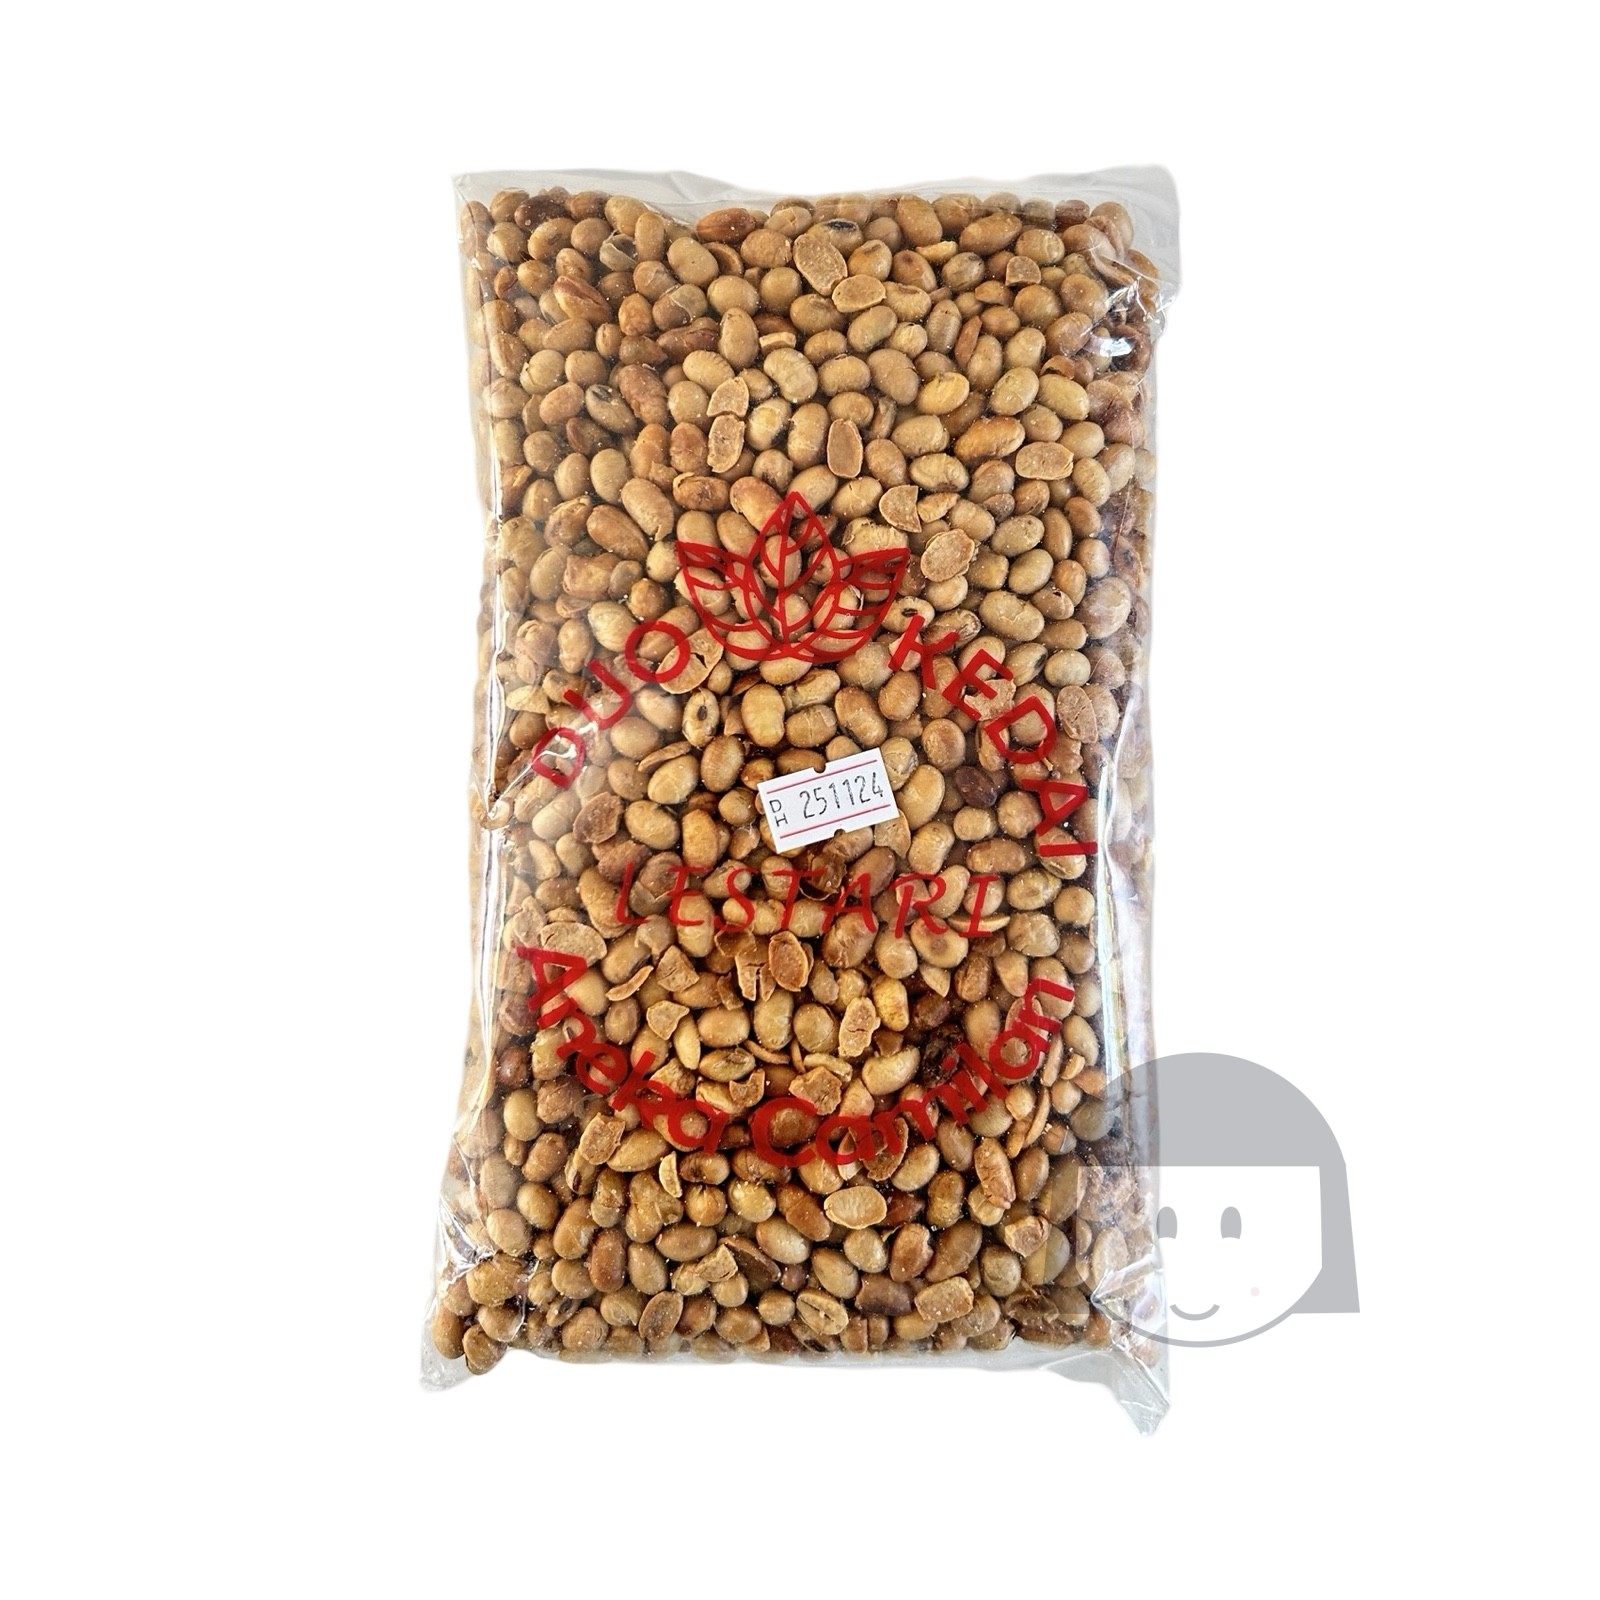 Lestari Duo Kedai Kacang Kedelai Goreng 350 gr Limited Products